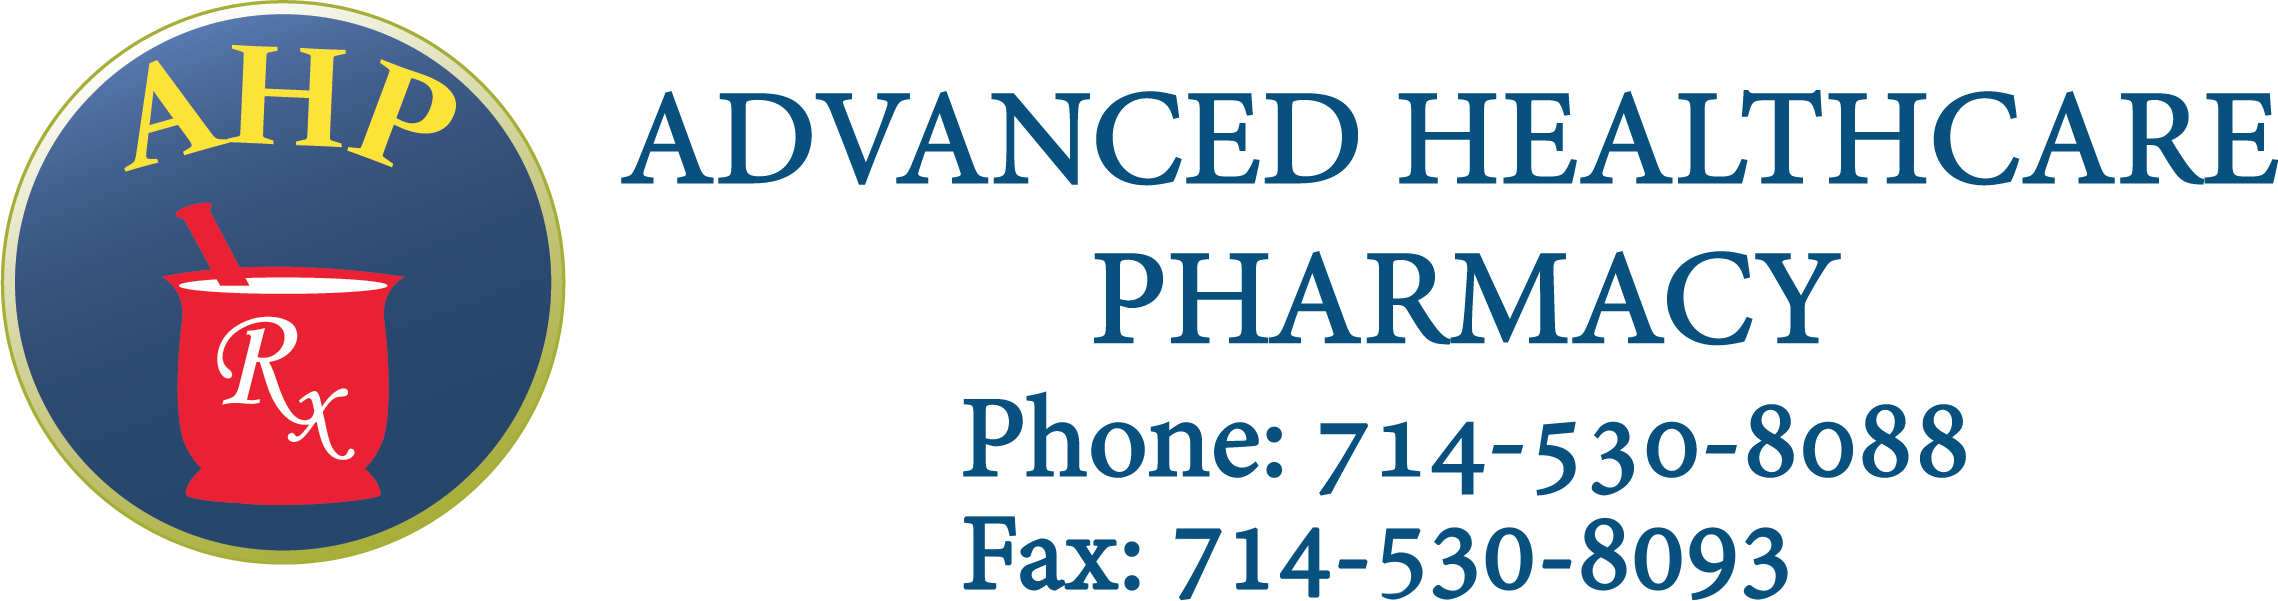 Advanced Healthcare Pharmacy